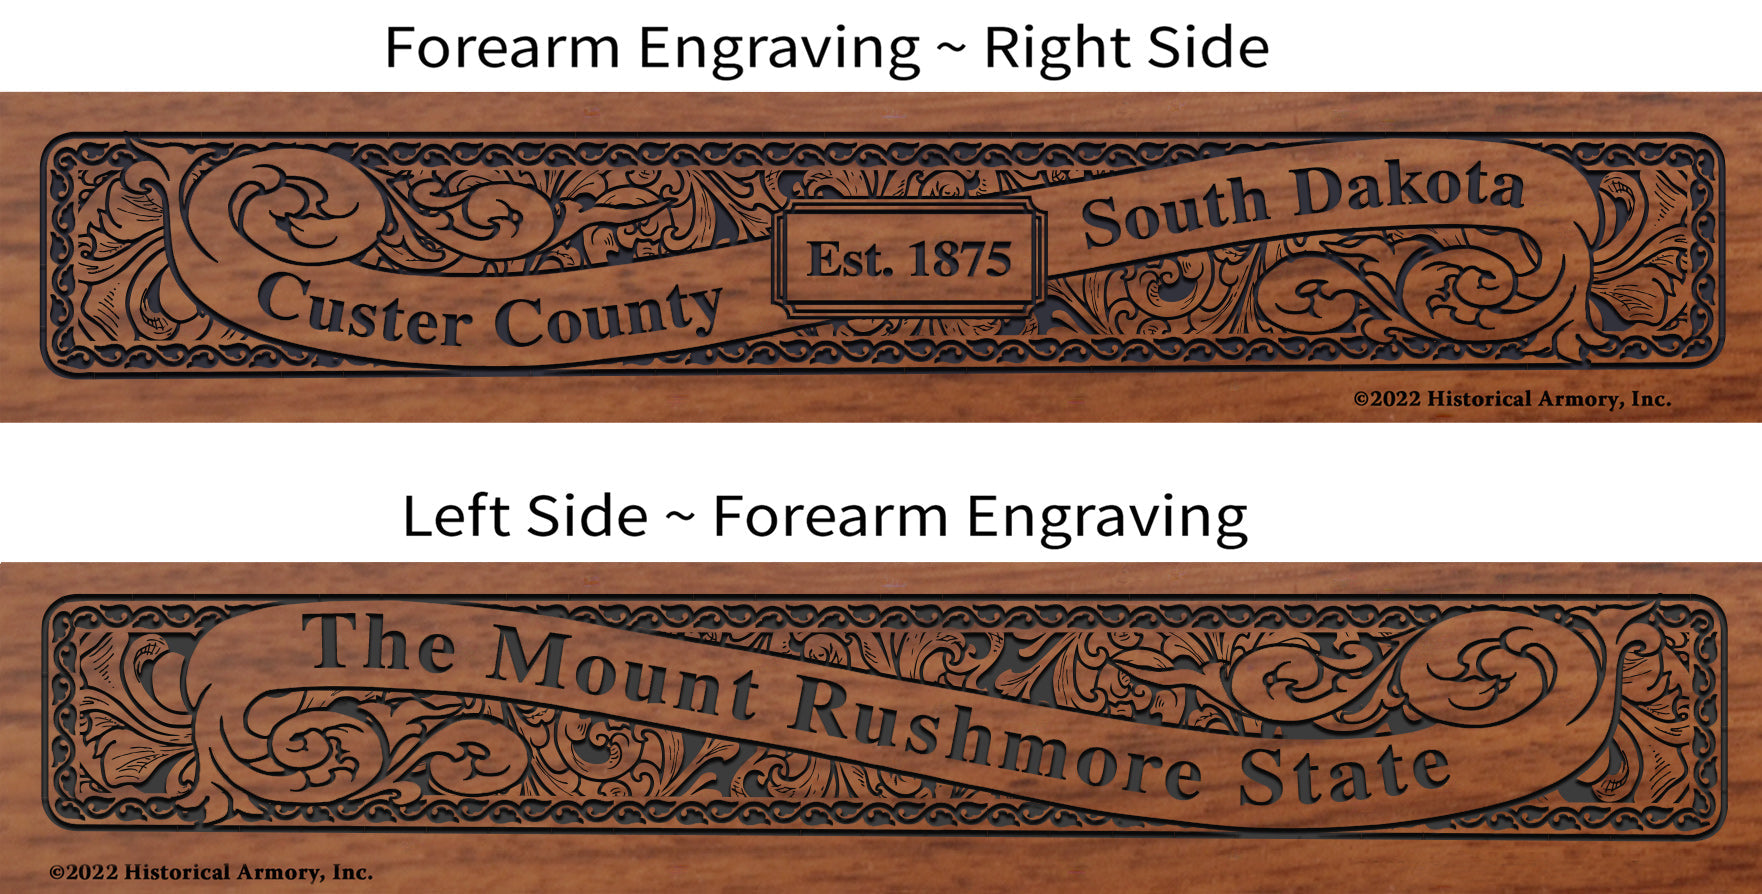 Custer County South Dakota Engraved Rifle Forearm